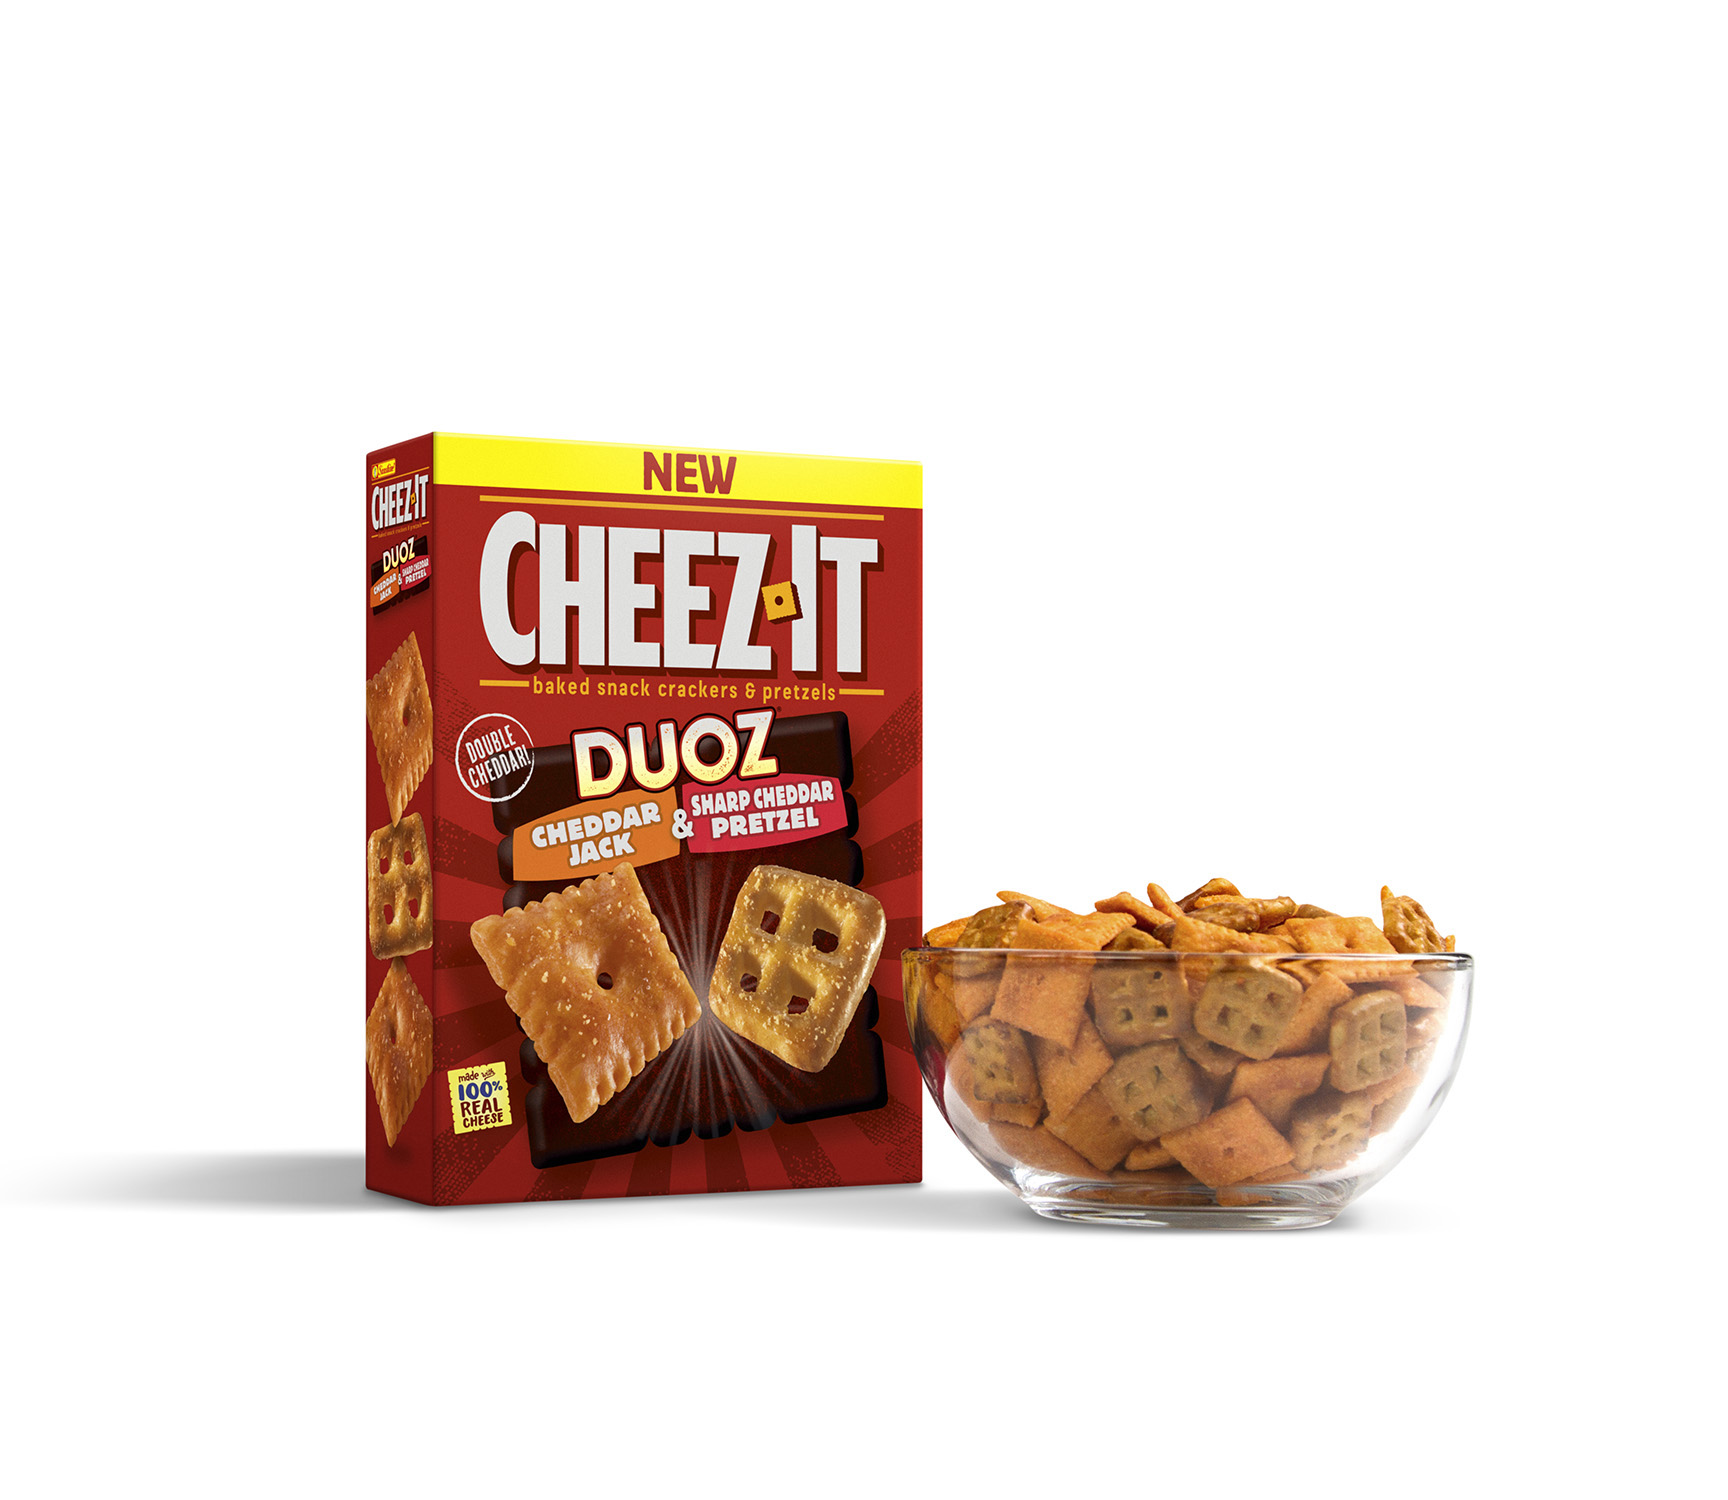 Cheez-It launches new sharp cheddar pretzel Duoz variety